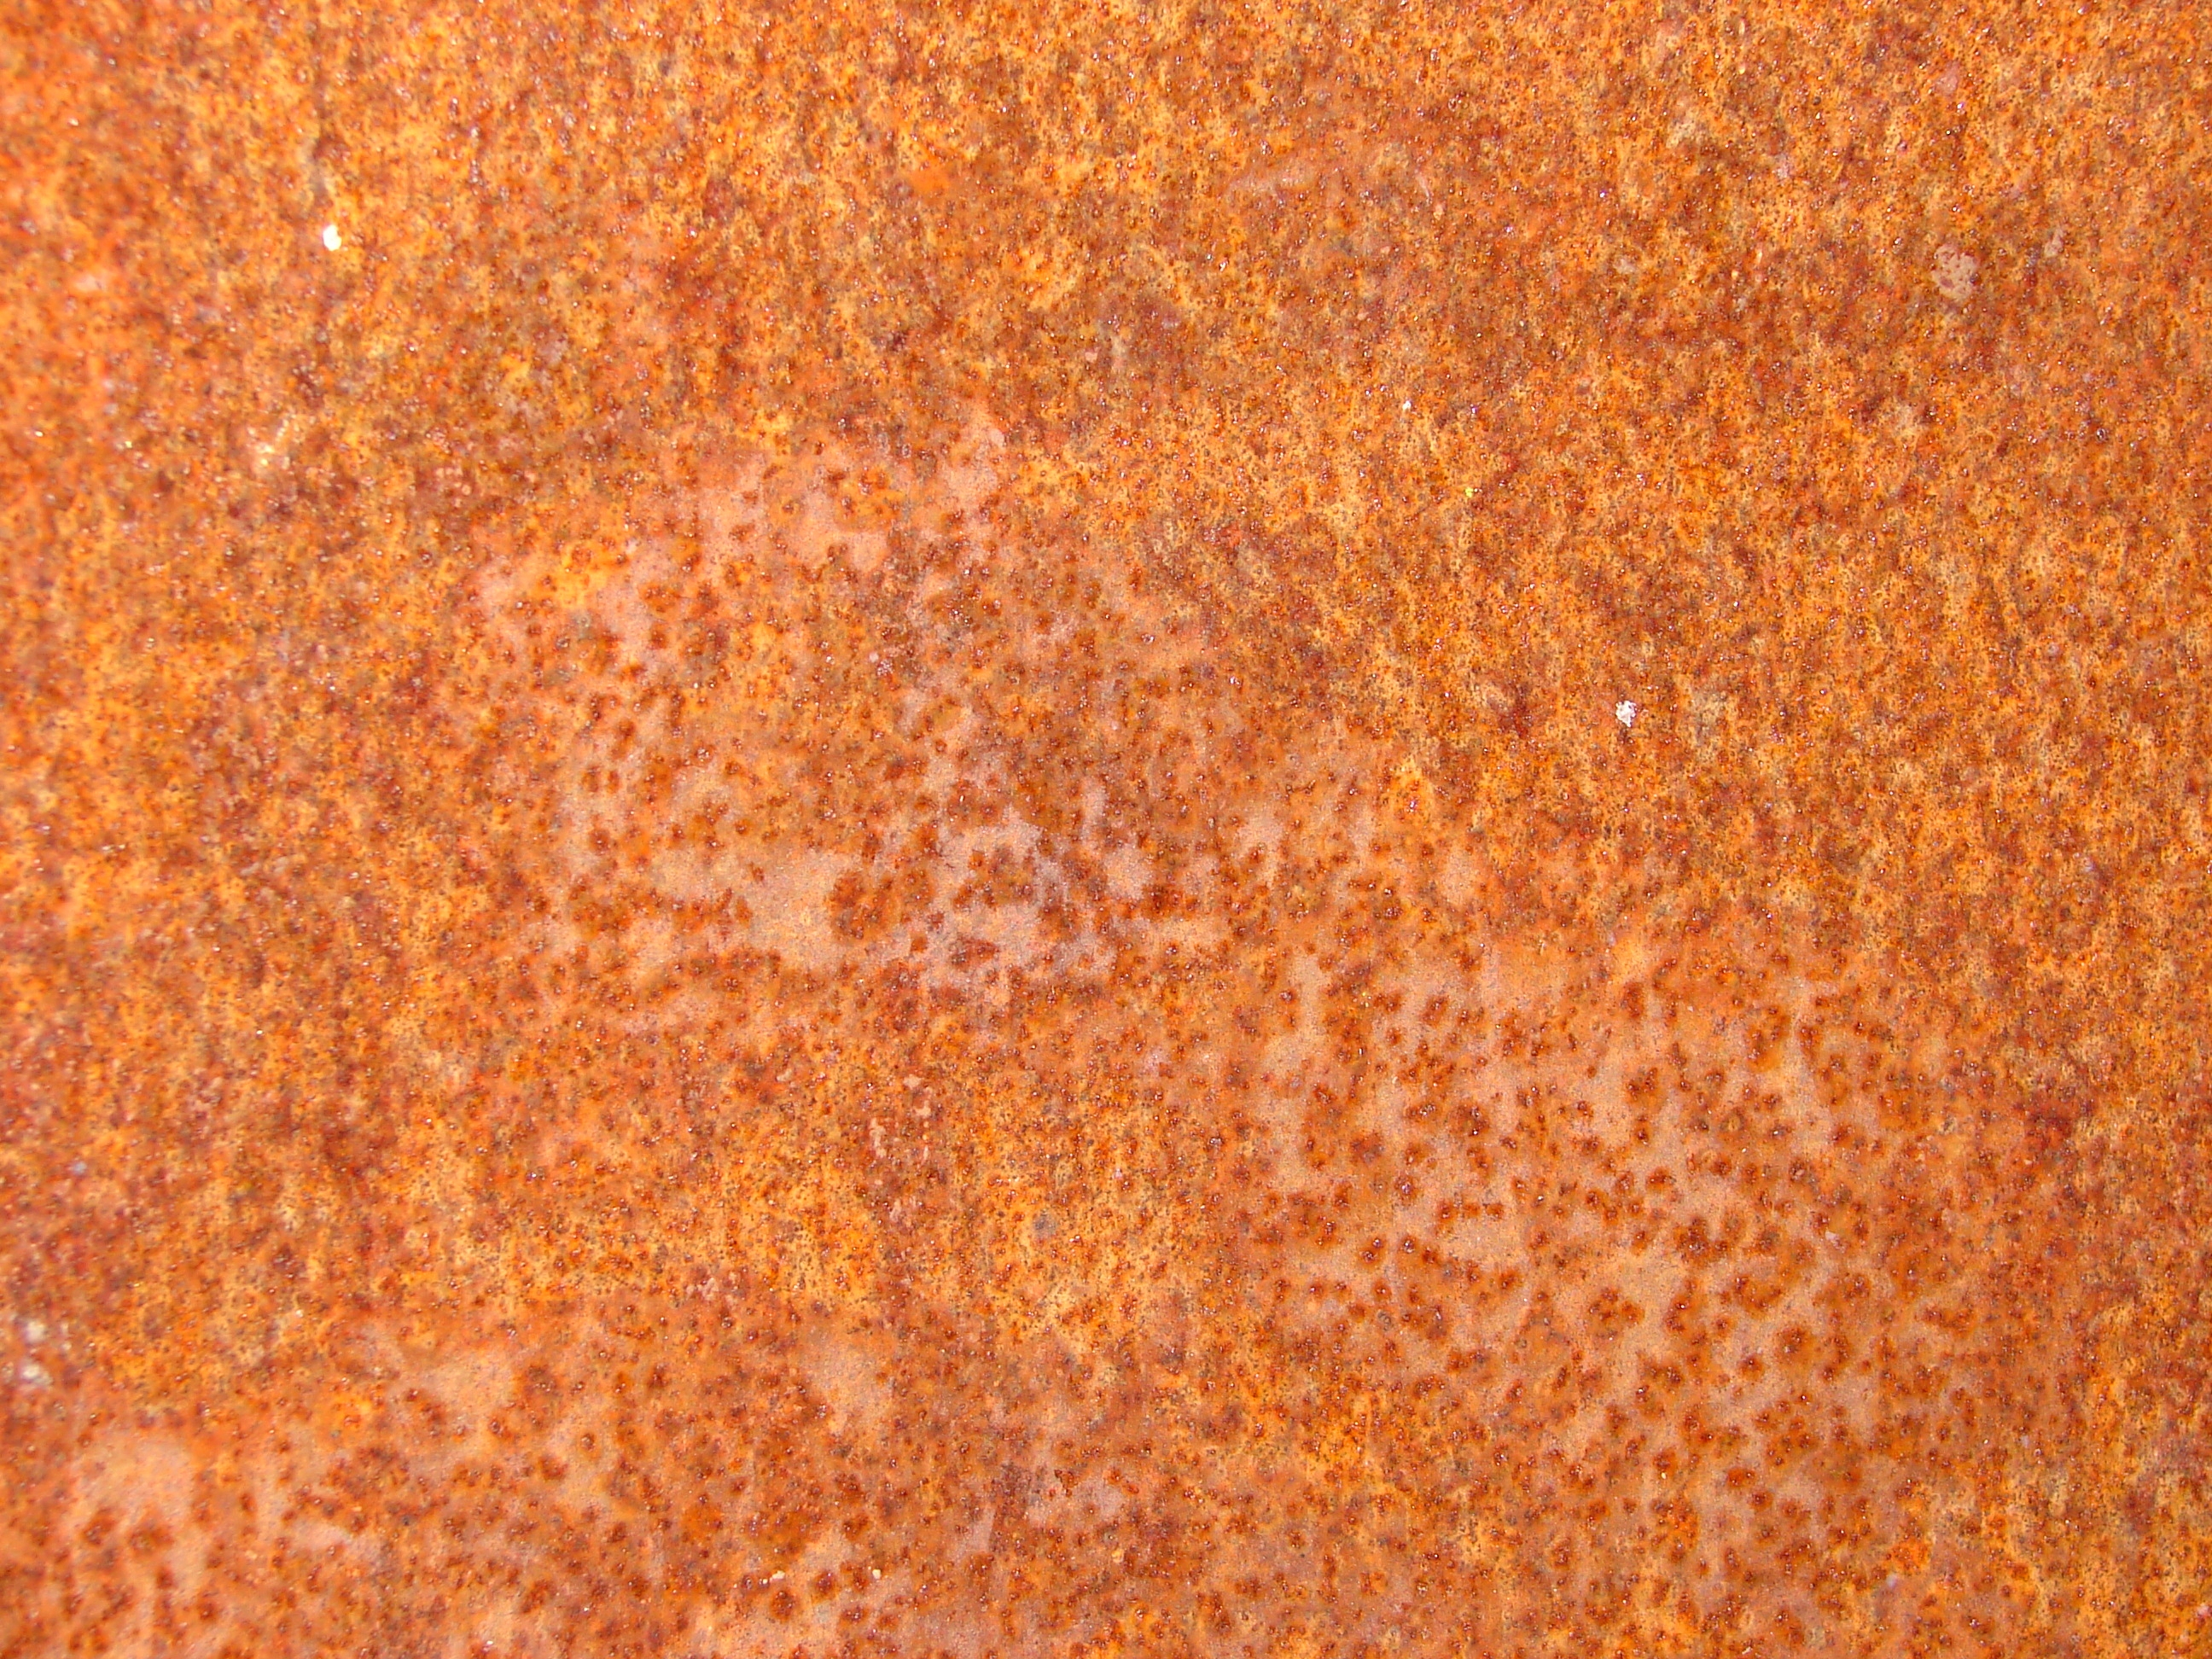 Metal Rust Texture 02 by FantasyStock on DeviantArt